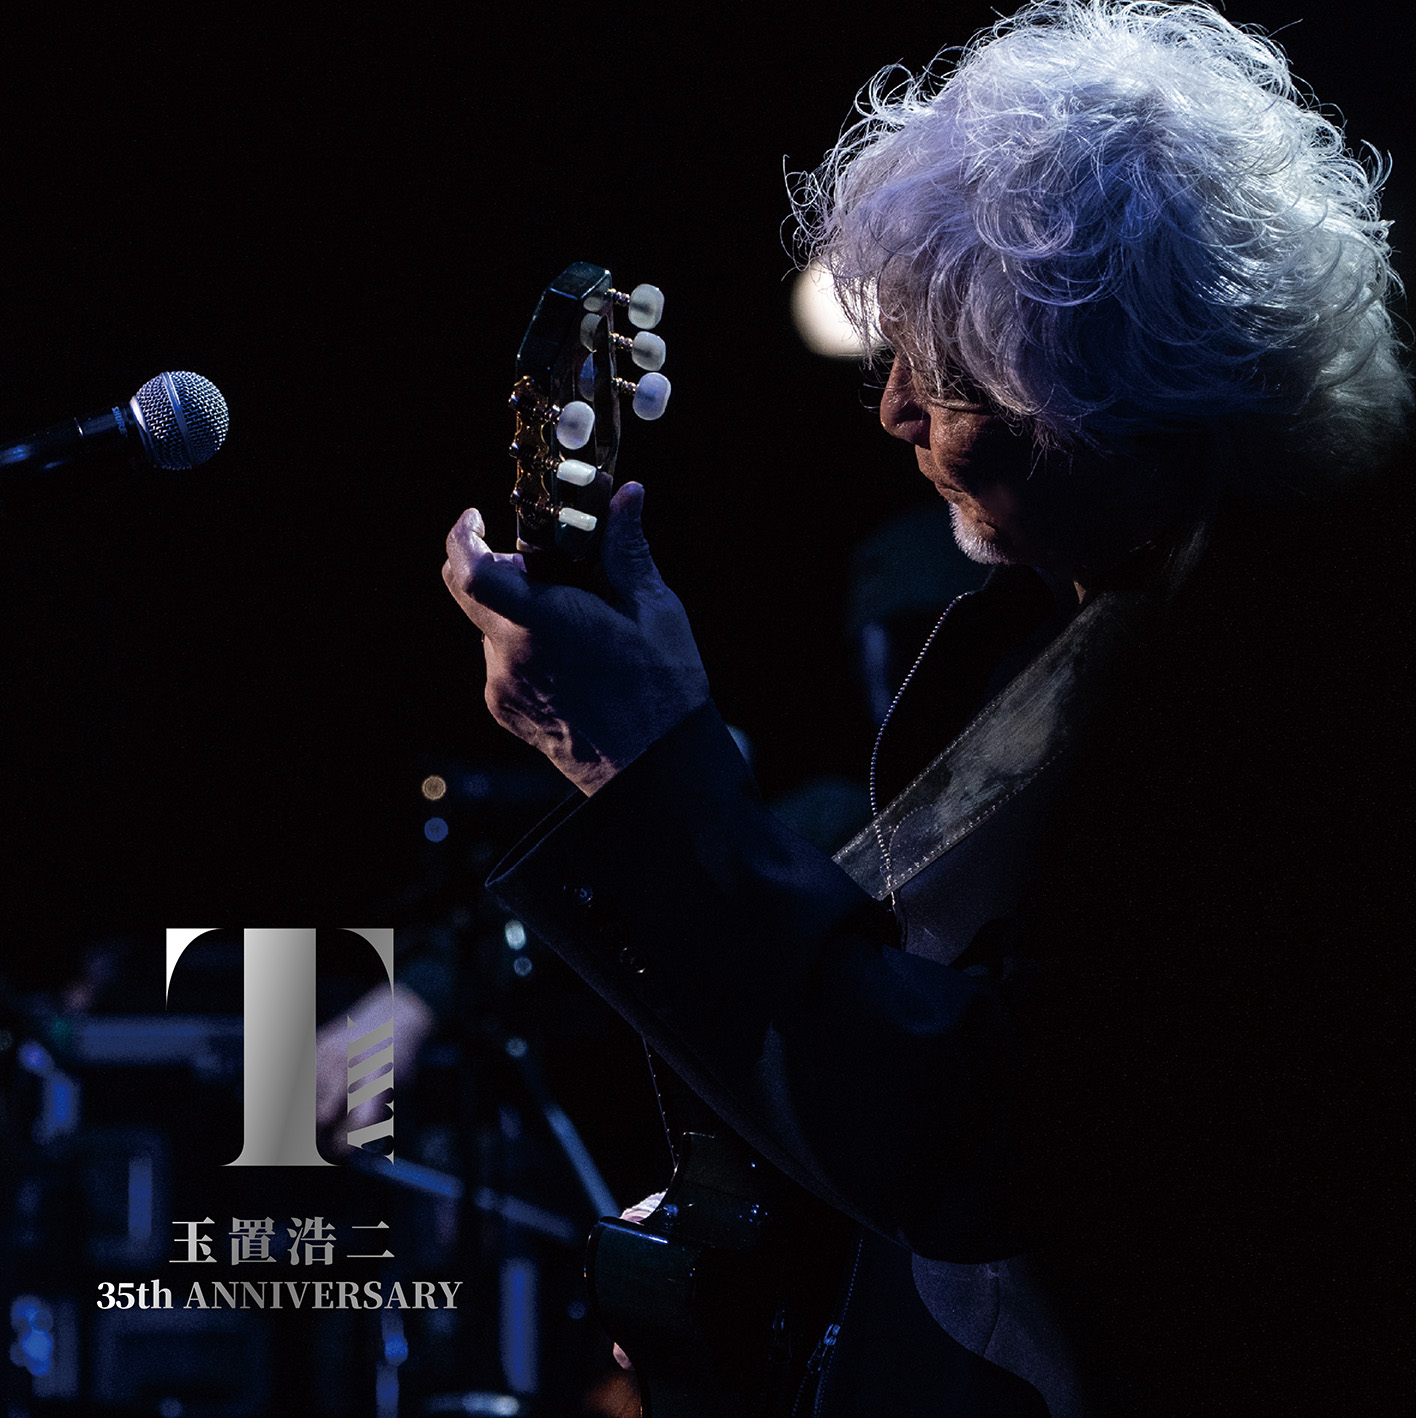 【CD】玉置浩二 Concert Tour 2022 故郷楽団 35th ANNIVERSARY 〜星路(みち)〜 in 仙台